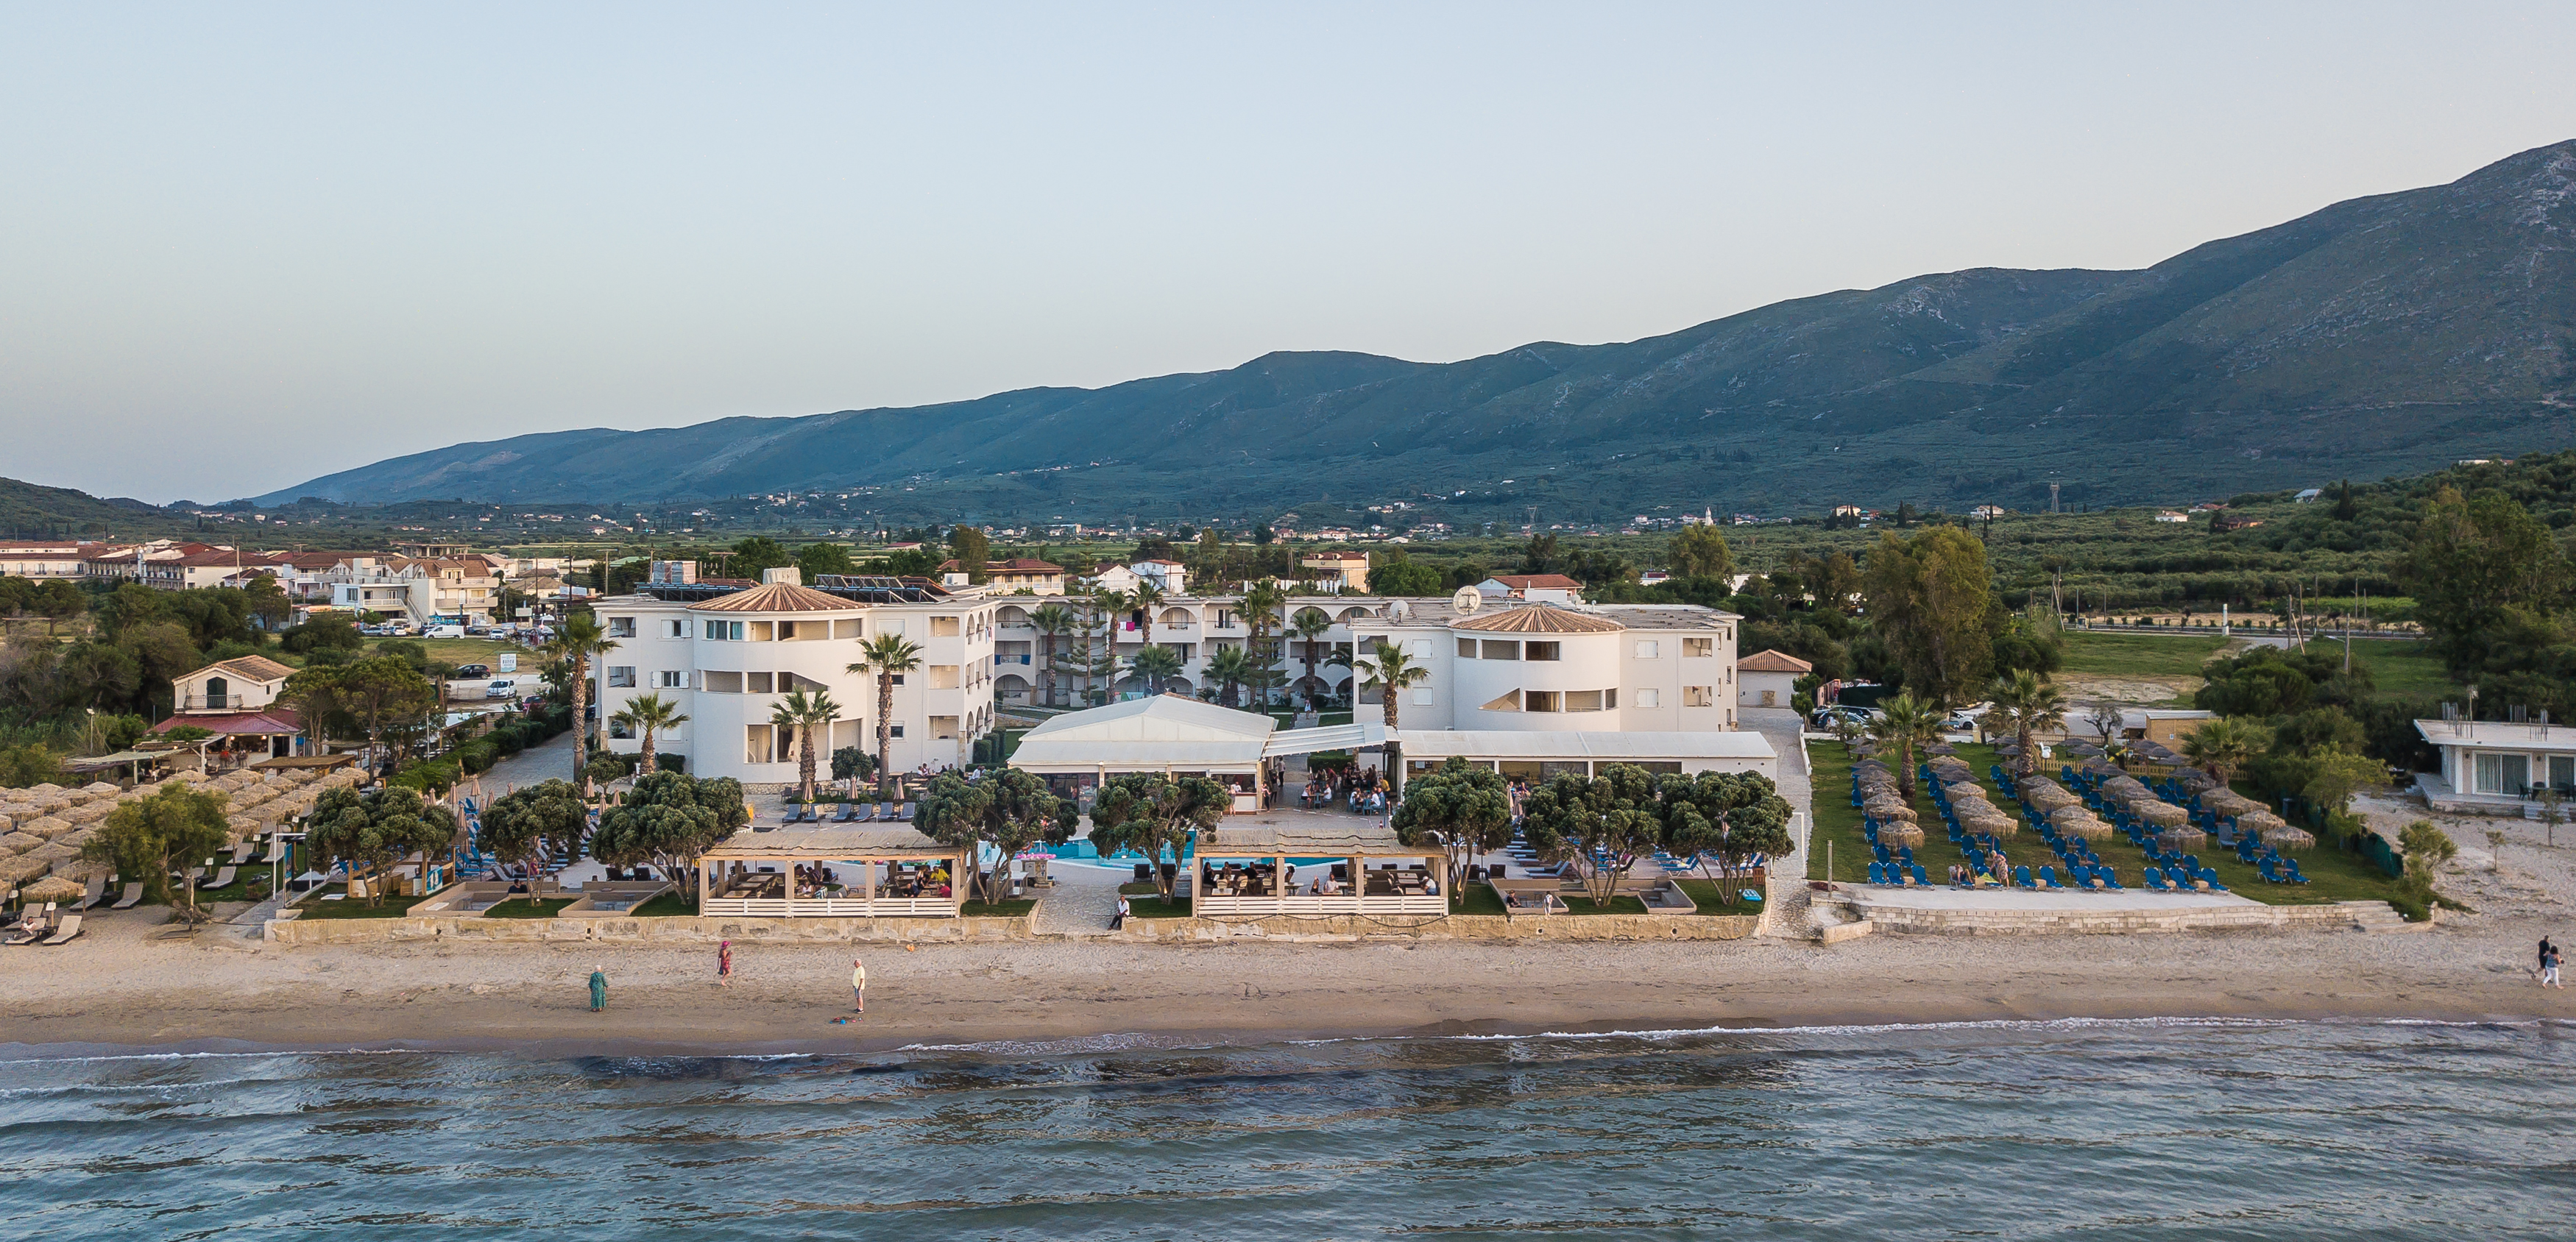 Alykanas Beach Grand Hotel- Ζάκυνθος ✦ -45% ✦ 3 Ημέρες (2 Διανυκτερεύσεις) ✦ 2 άτομα + 1 παιδί έως 12 ετών ✦ 12 ✦ 28/06/2023 έως 26/07/2023 ✦ Μπροστά στην Παραλία!